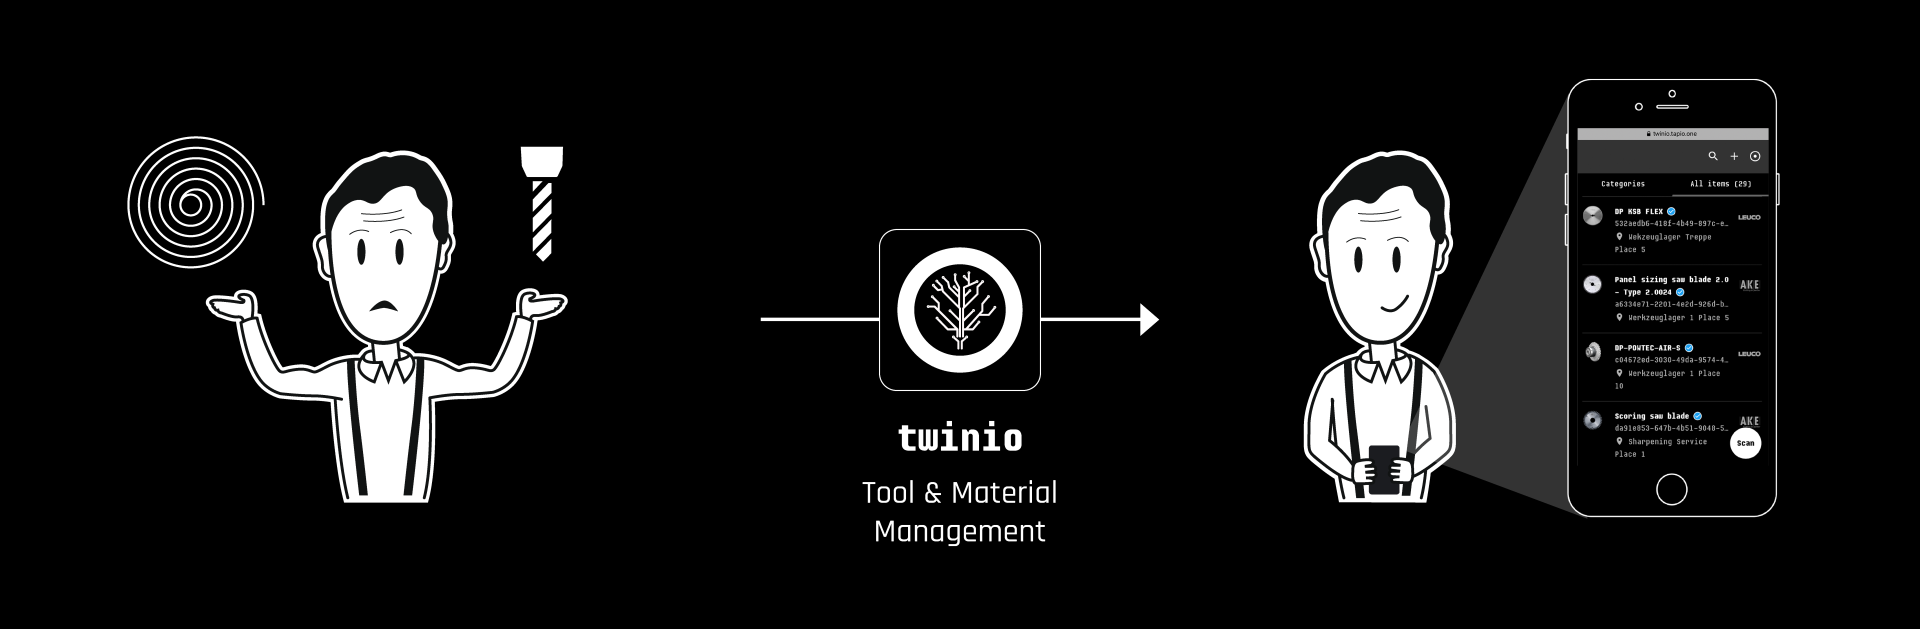 web- tapio twinio Joey Website tools materials finding EN